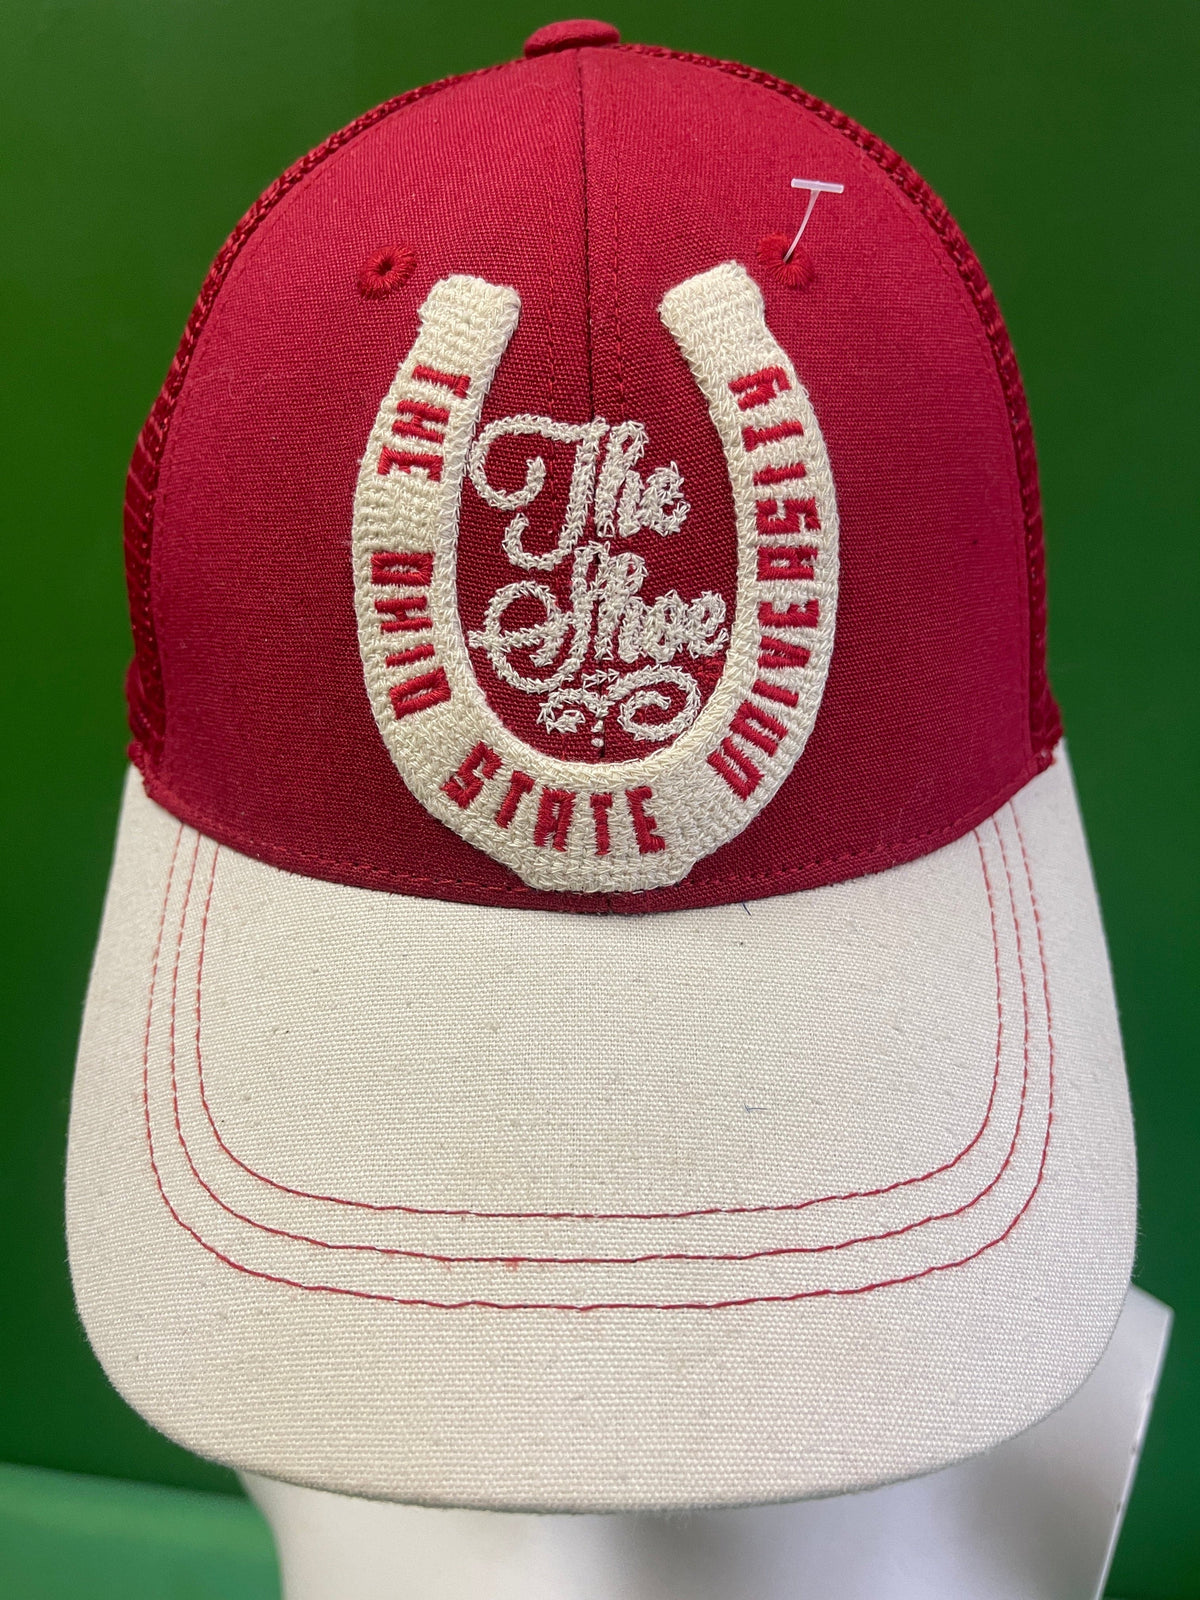 NCAA Ohio State Buckeyes Mesh 'The Shoe' Snapback Hat/Cap OSFM